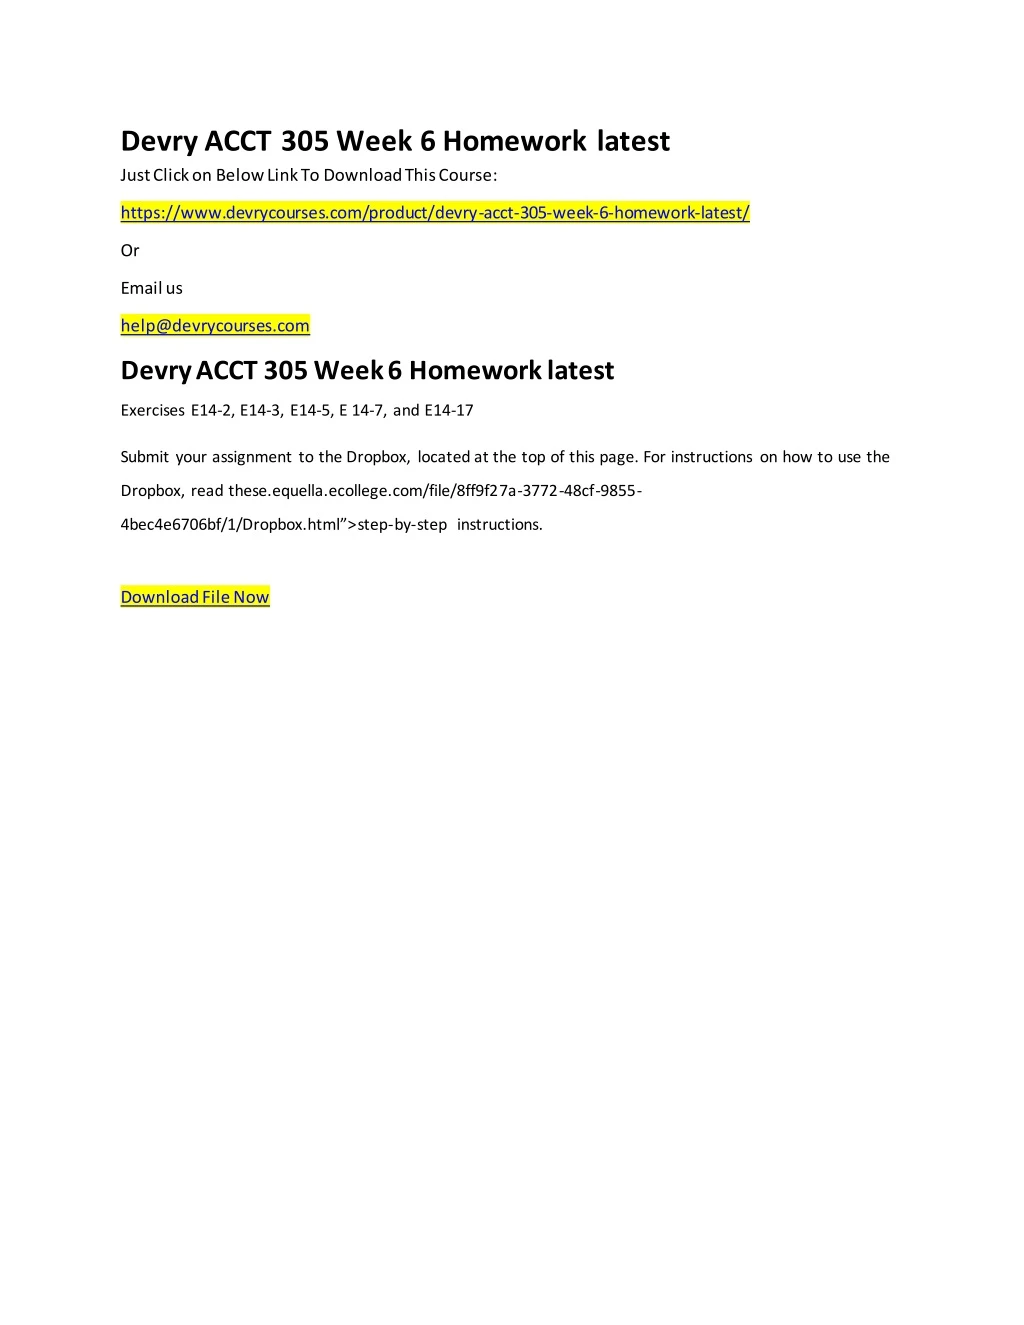 devry acct 305 week 6 homework latest just click